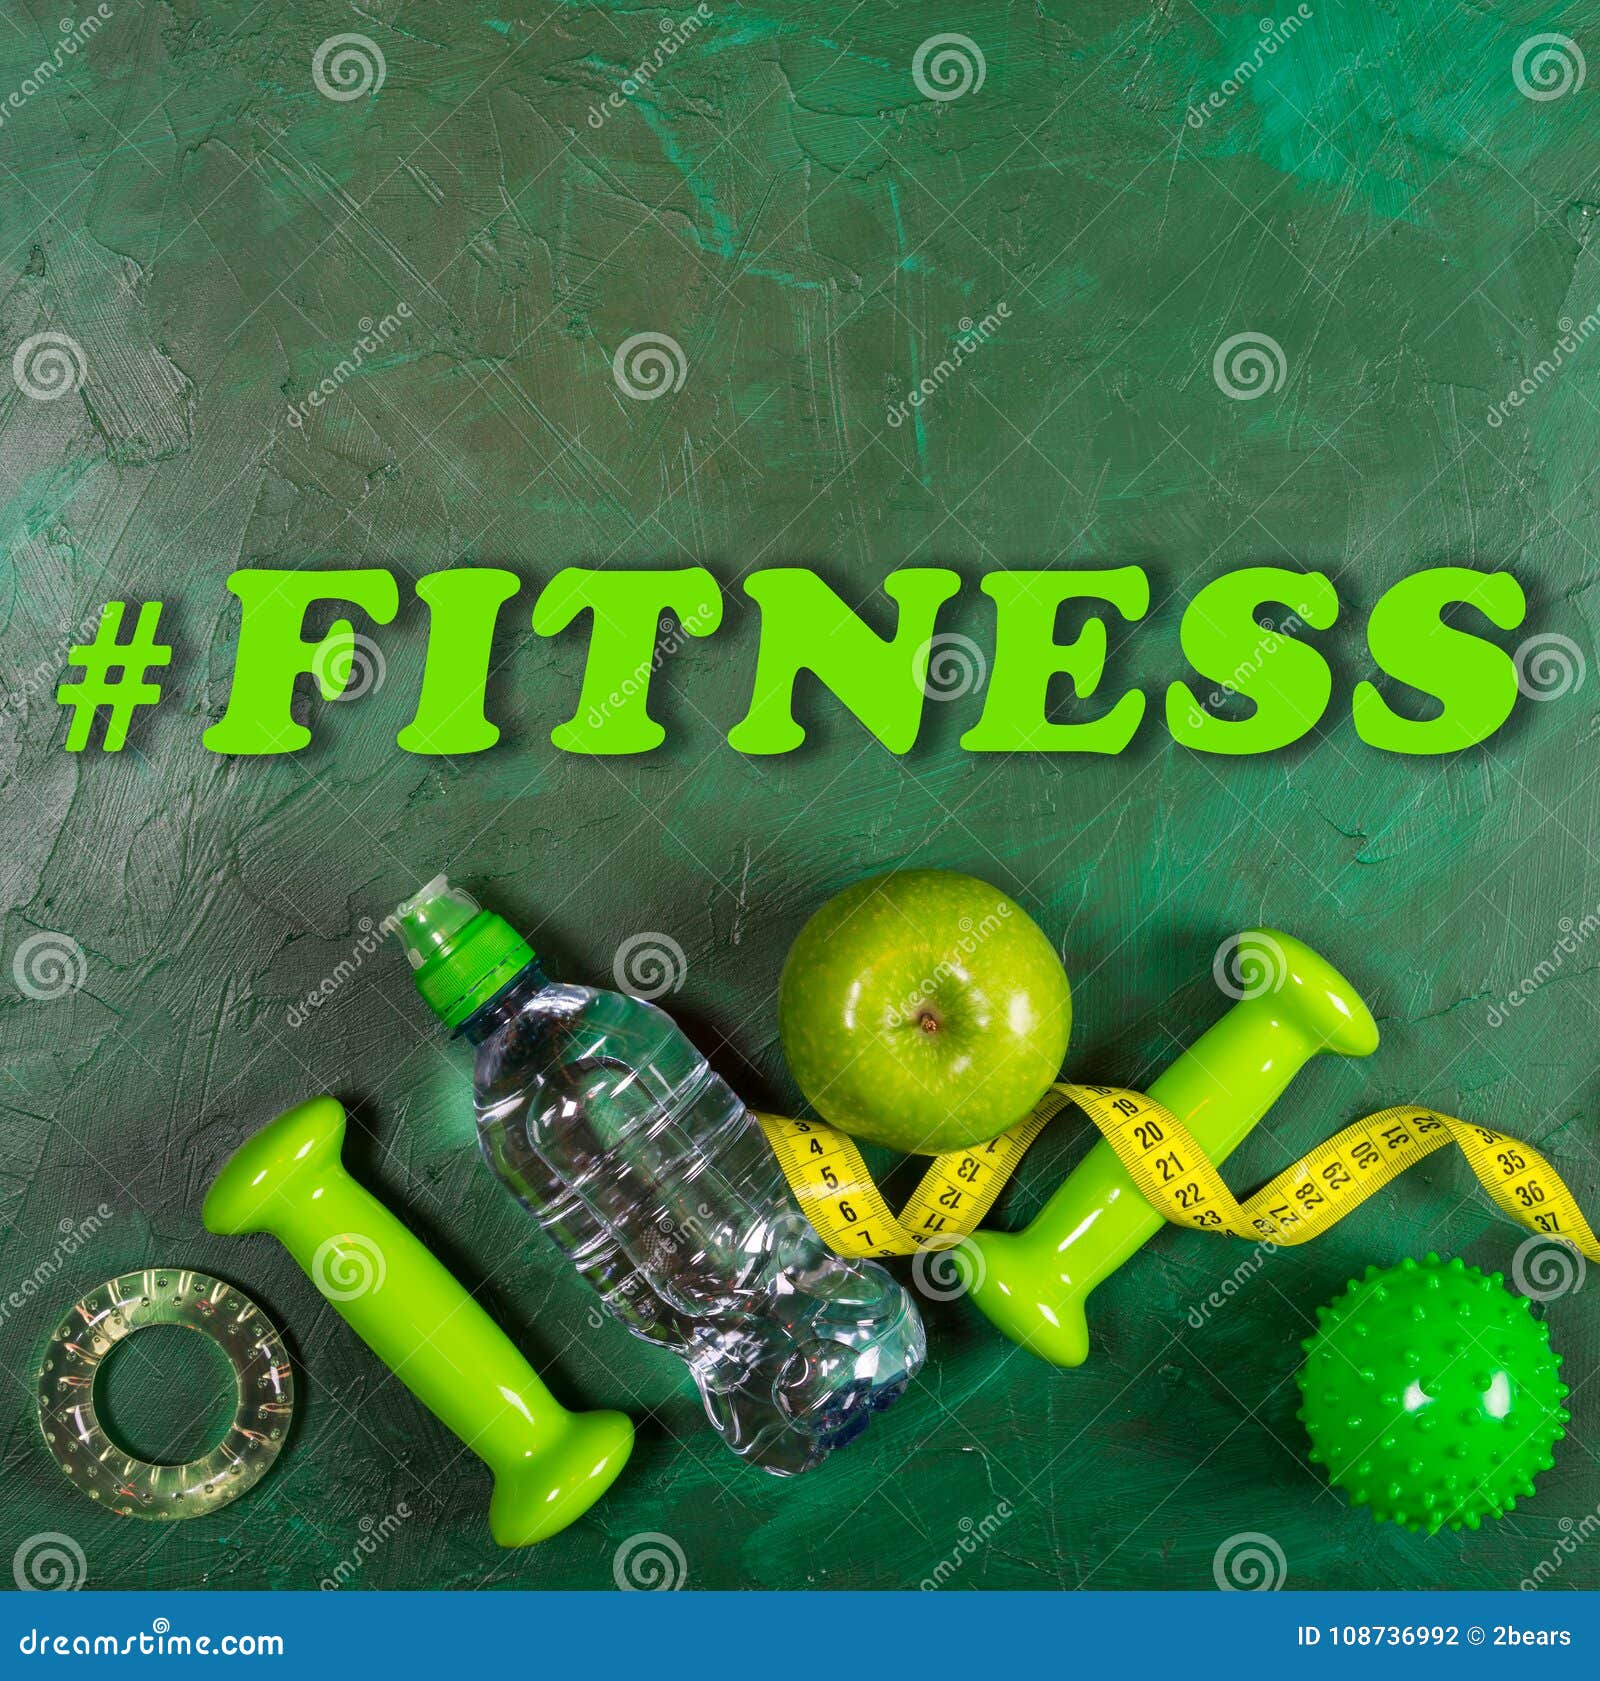 https://thumbs.dreamstime.com/z/green-background-hashtag-fitness-dumbbell-apple-water-bottle-massage-ball-measuring-tape-top-view-108736992.jpg